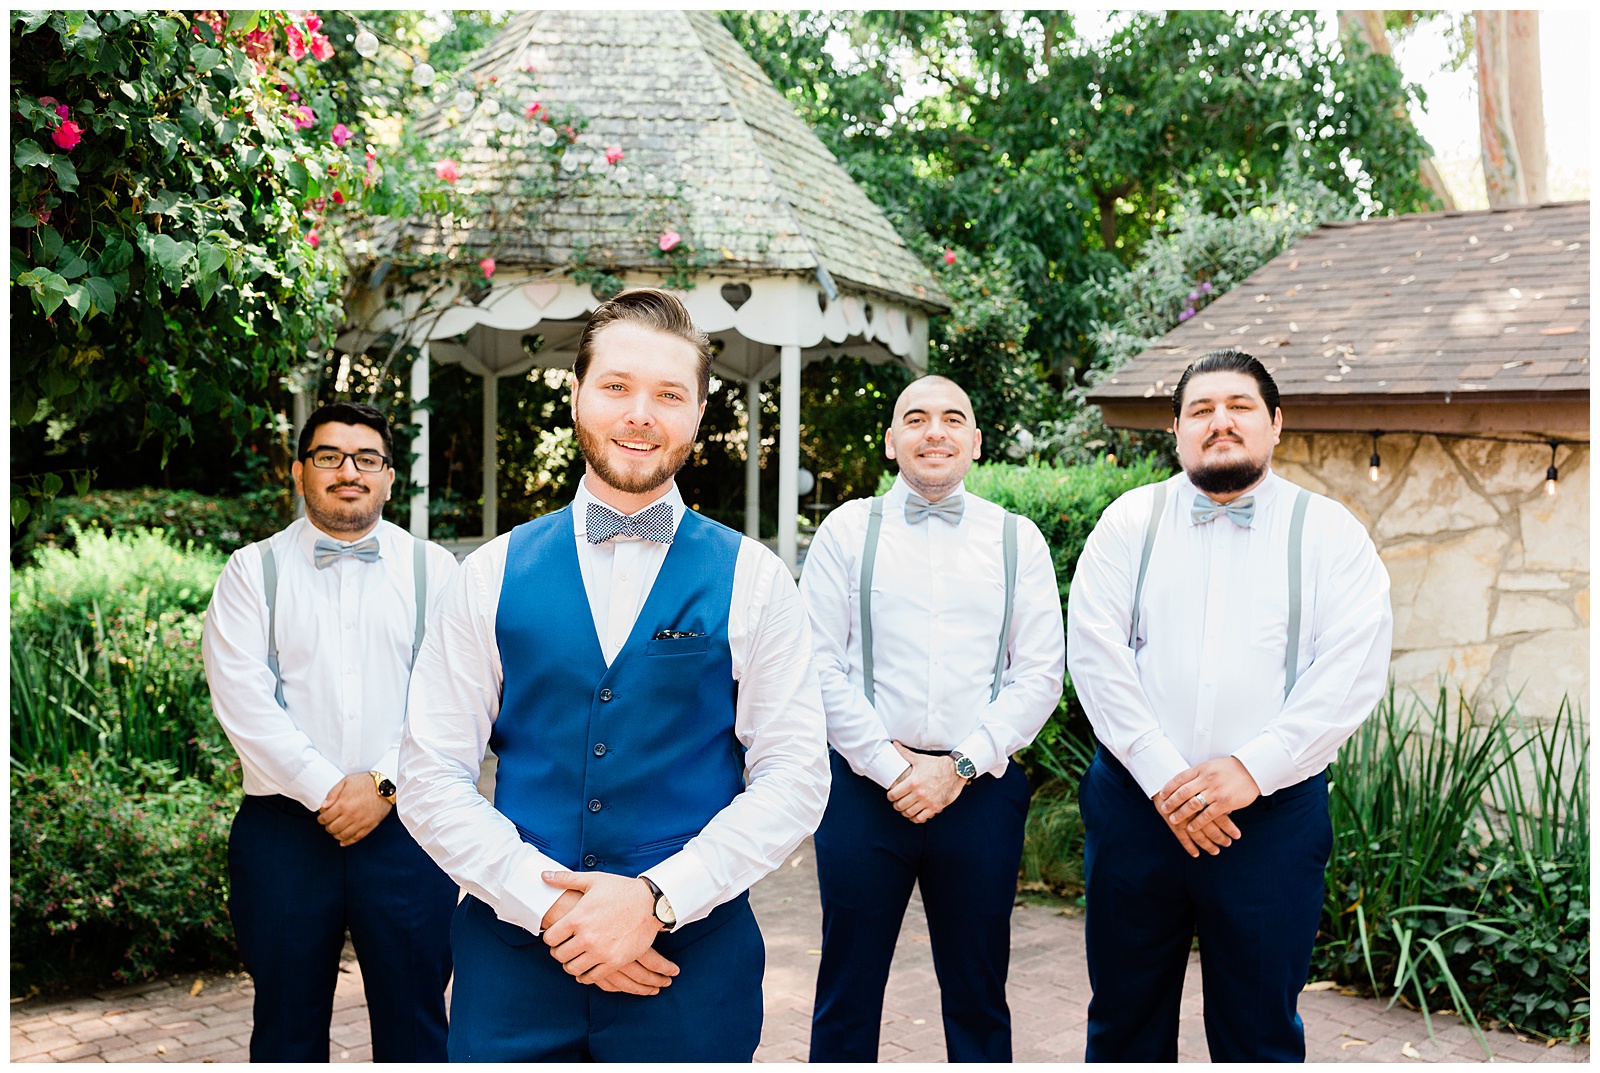 groom and his groomsmen posing for a photo at a summer garden wedding